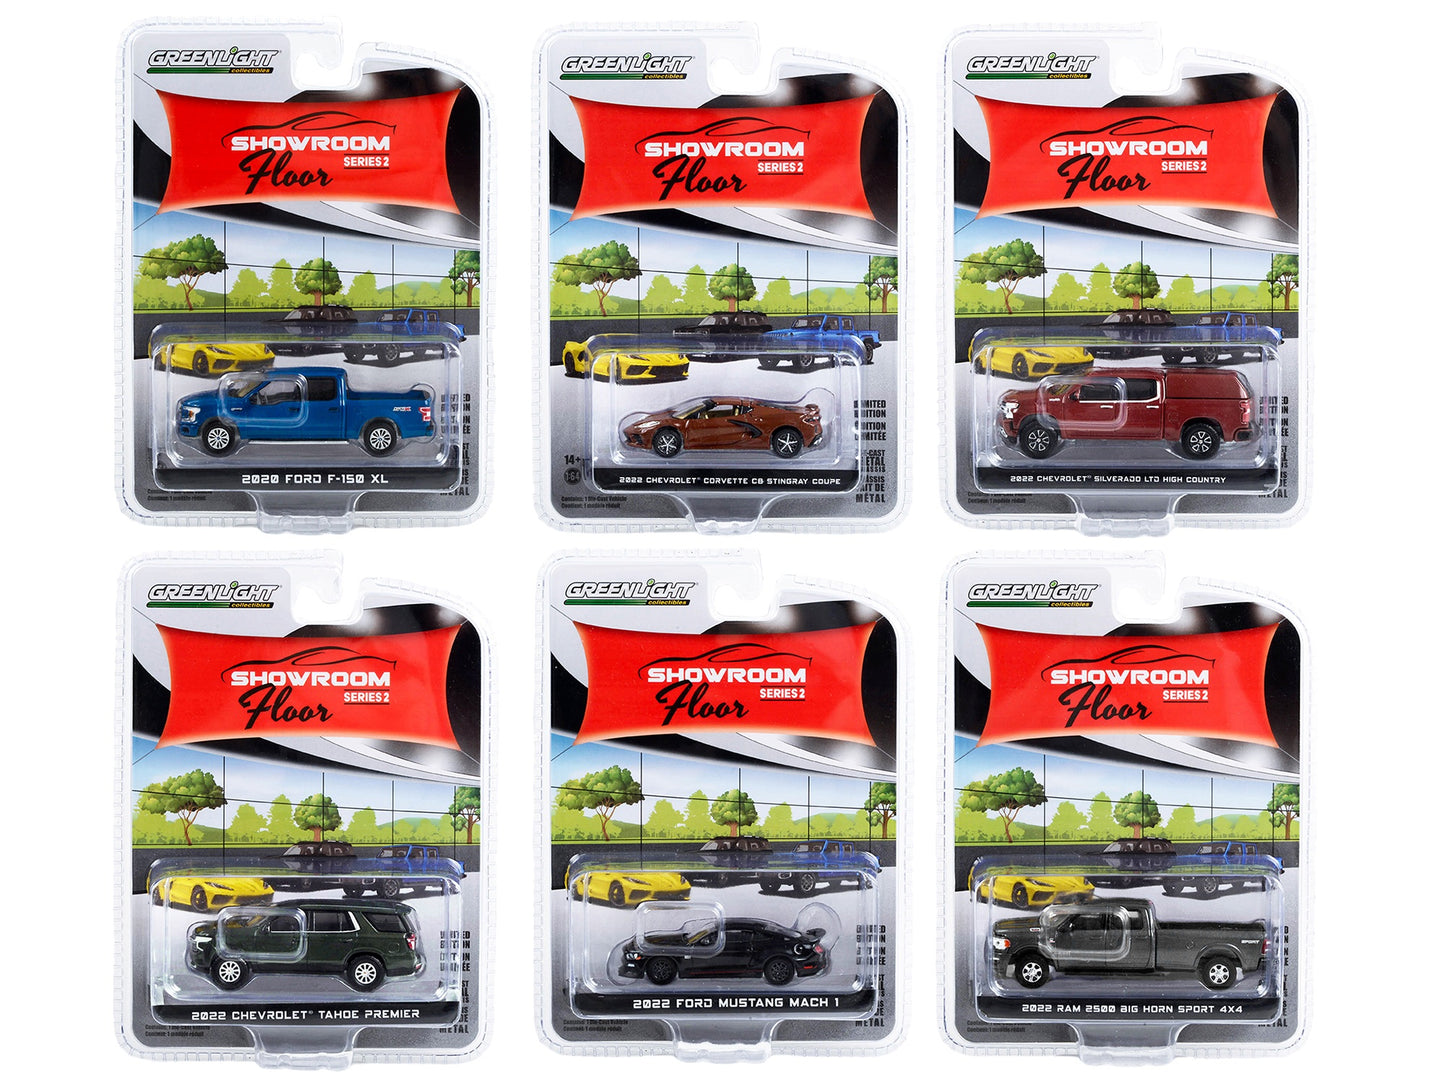 "Showroom Floor" Set of 6 Cars Series 2 1/64 Diecast Model Cars by Greenlight